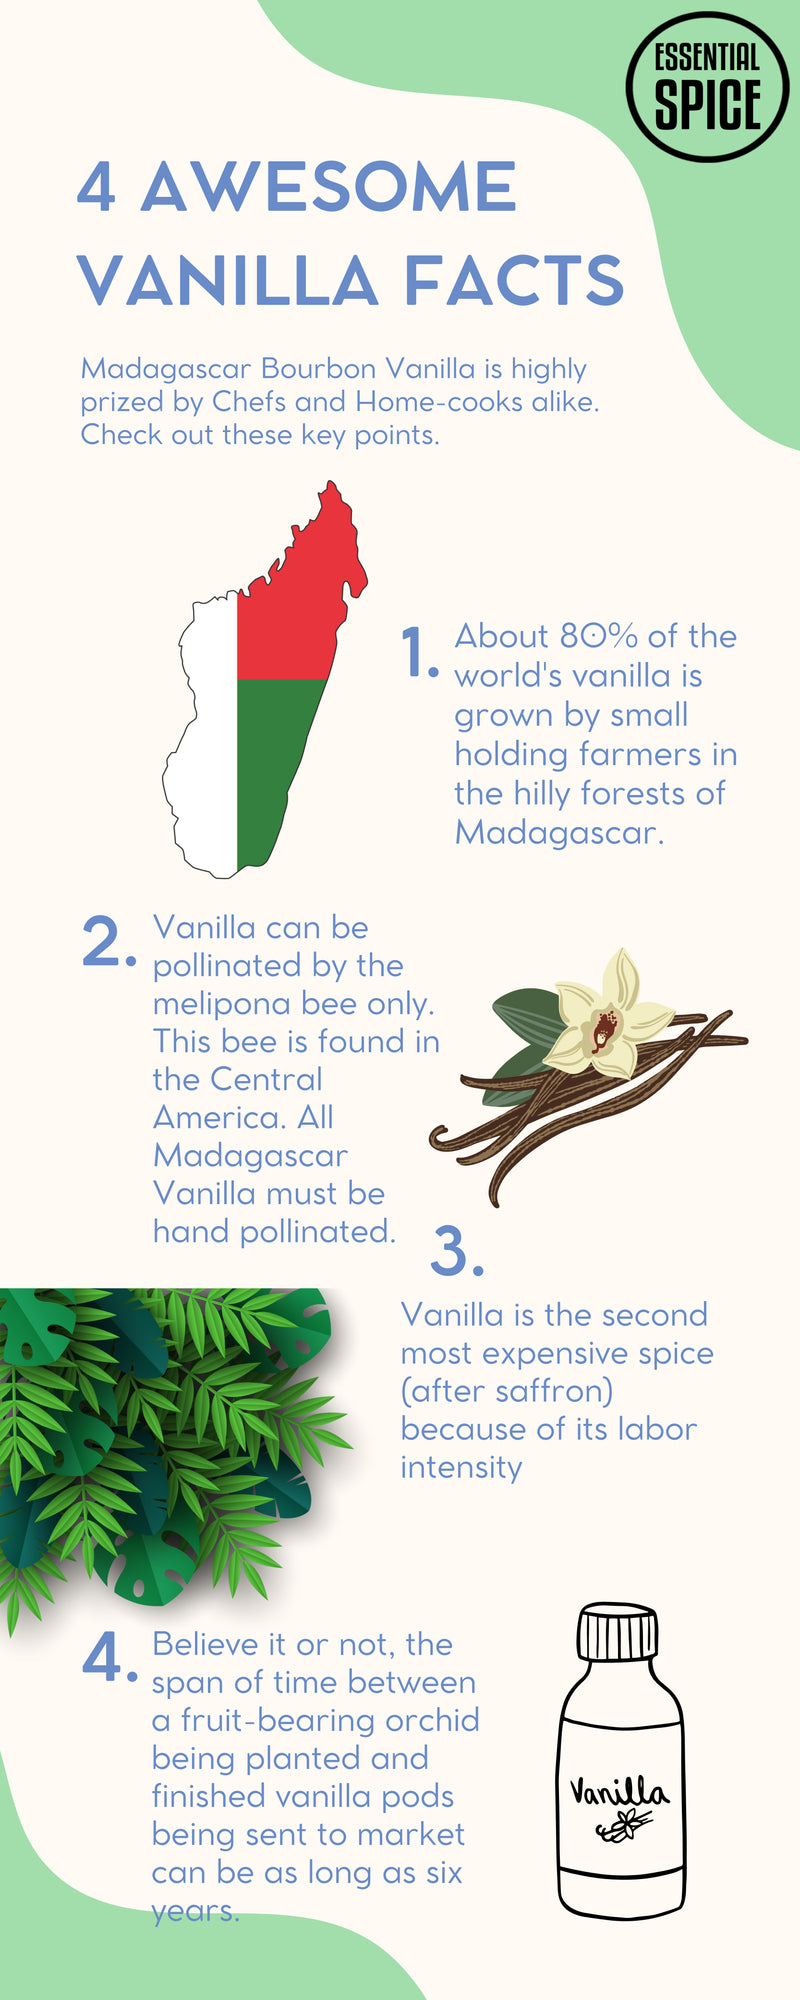 Essential Spice Gourmet Madagascar Bourbon Vanilla Beans - 25 Bean Pack